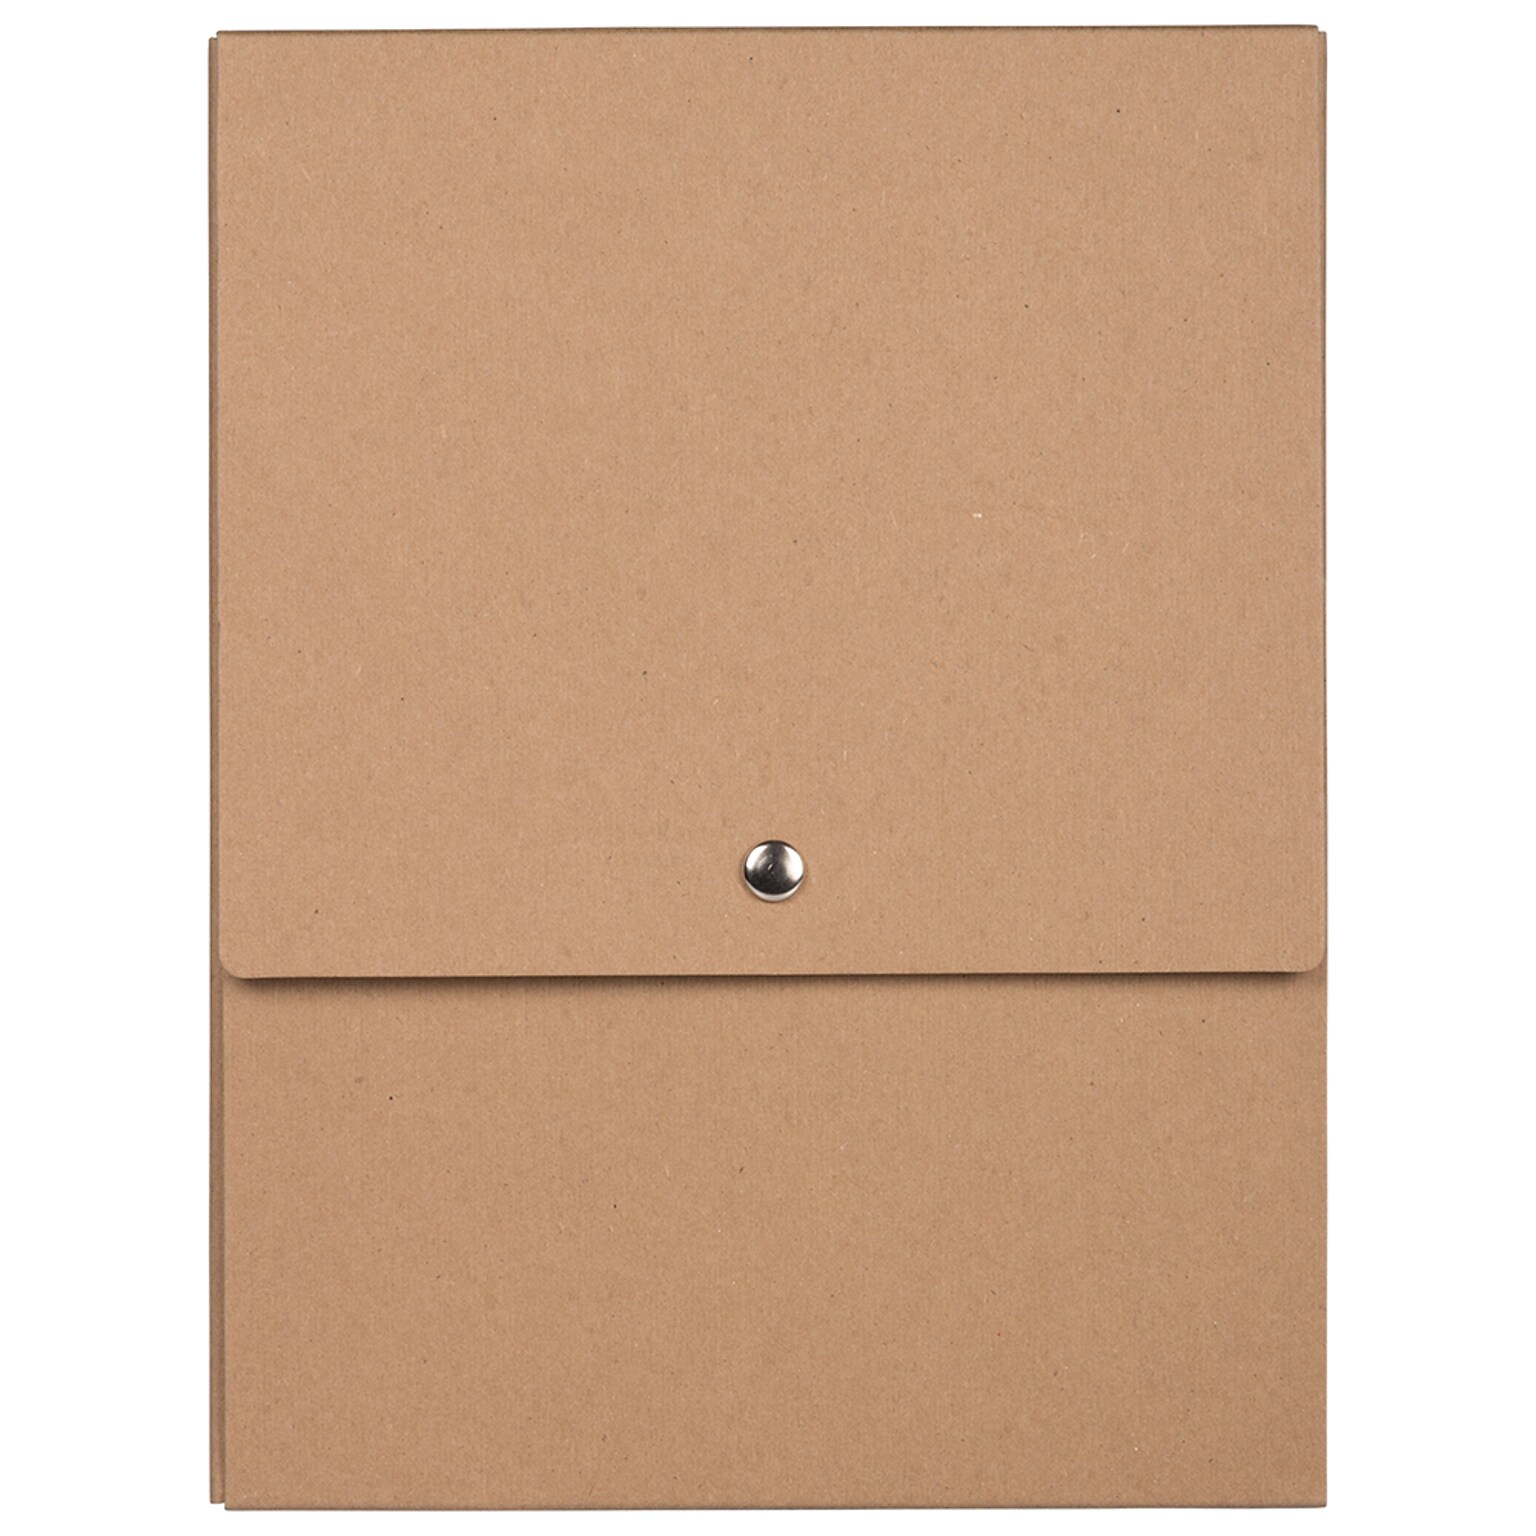 JAM PAPER Vertical Snap Closure Portfolio, 12 1/8 x 9 x 1/2, Brown Kraft (90334954)